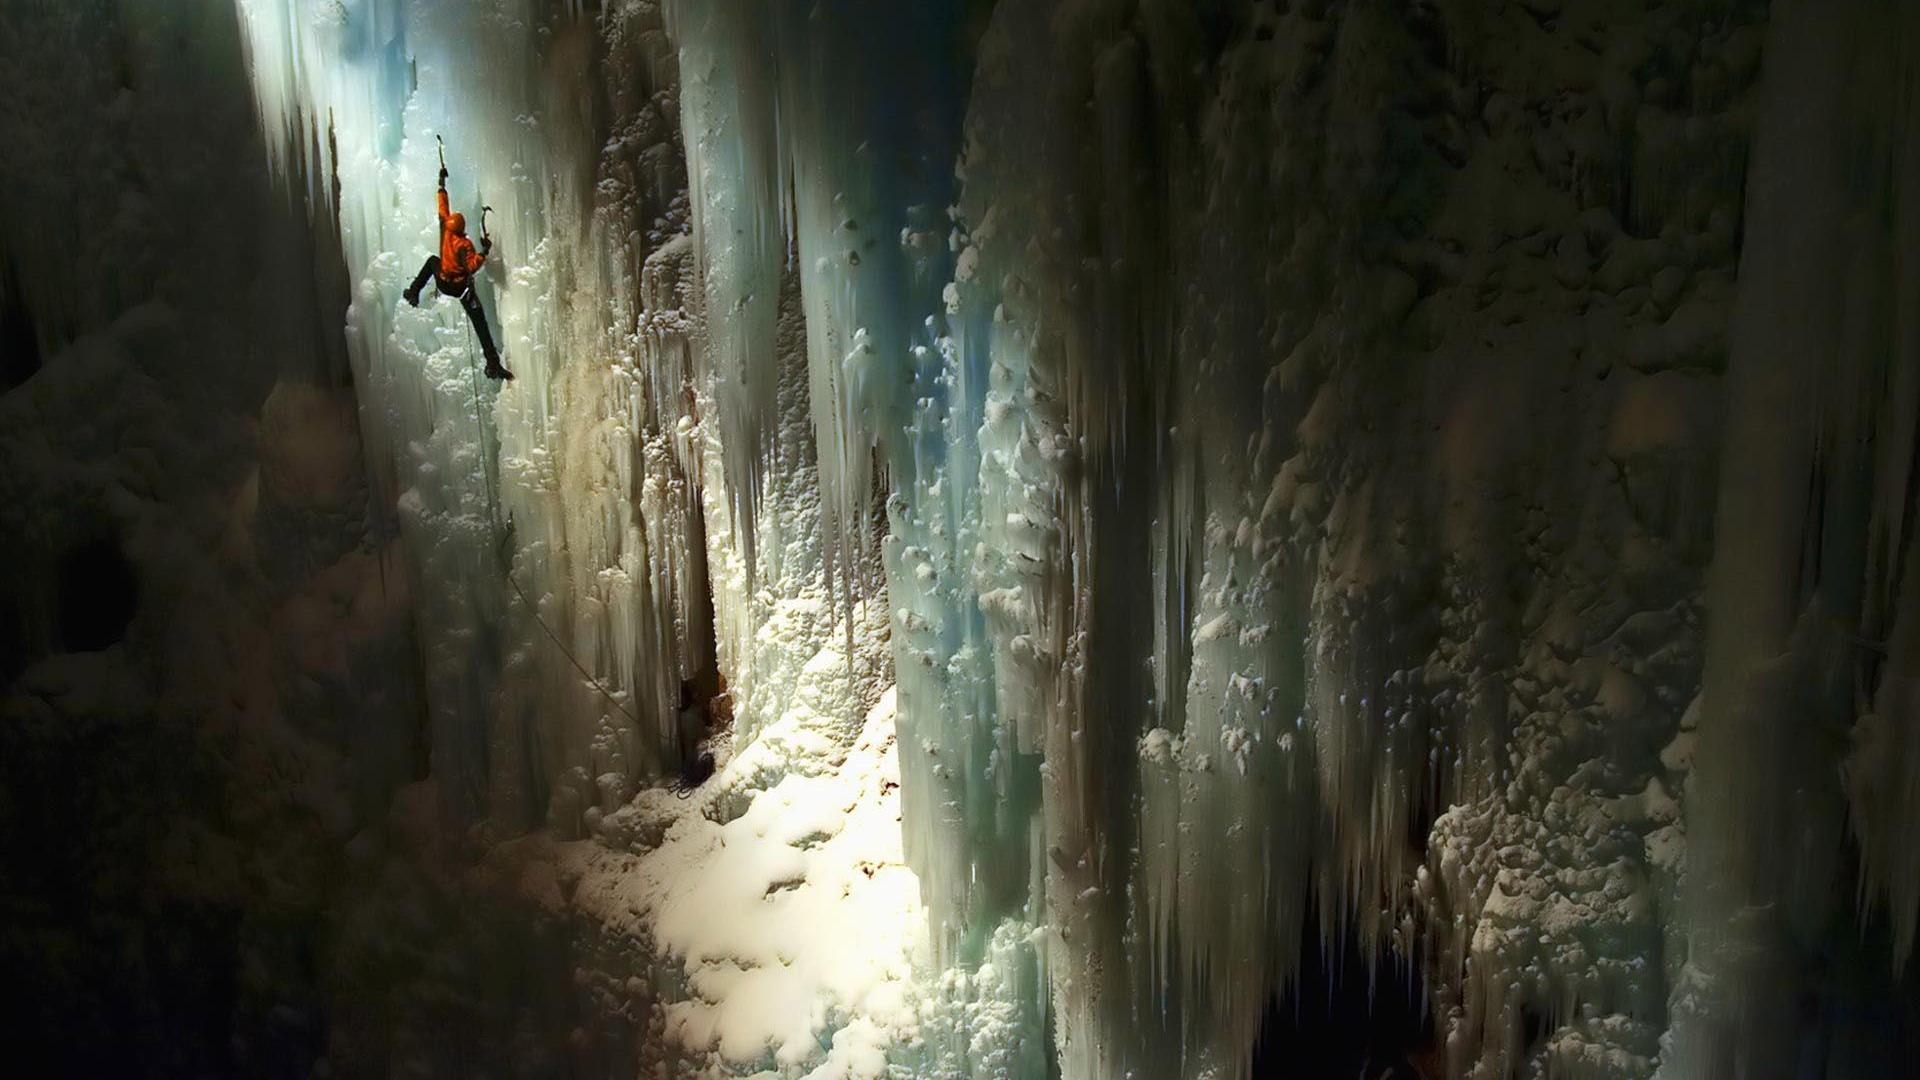 Cave Rock Ice climbing 1080x1920 Wallpaper 1920x1080 1920x1080